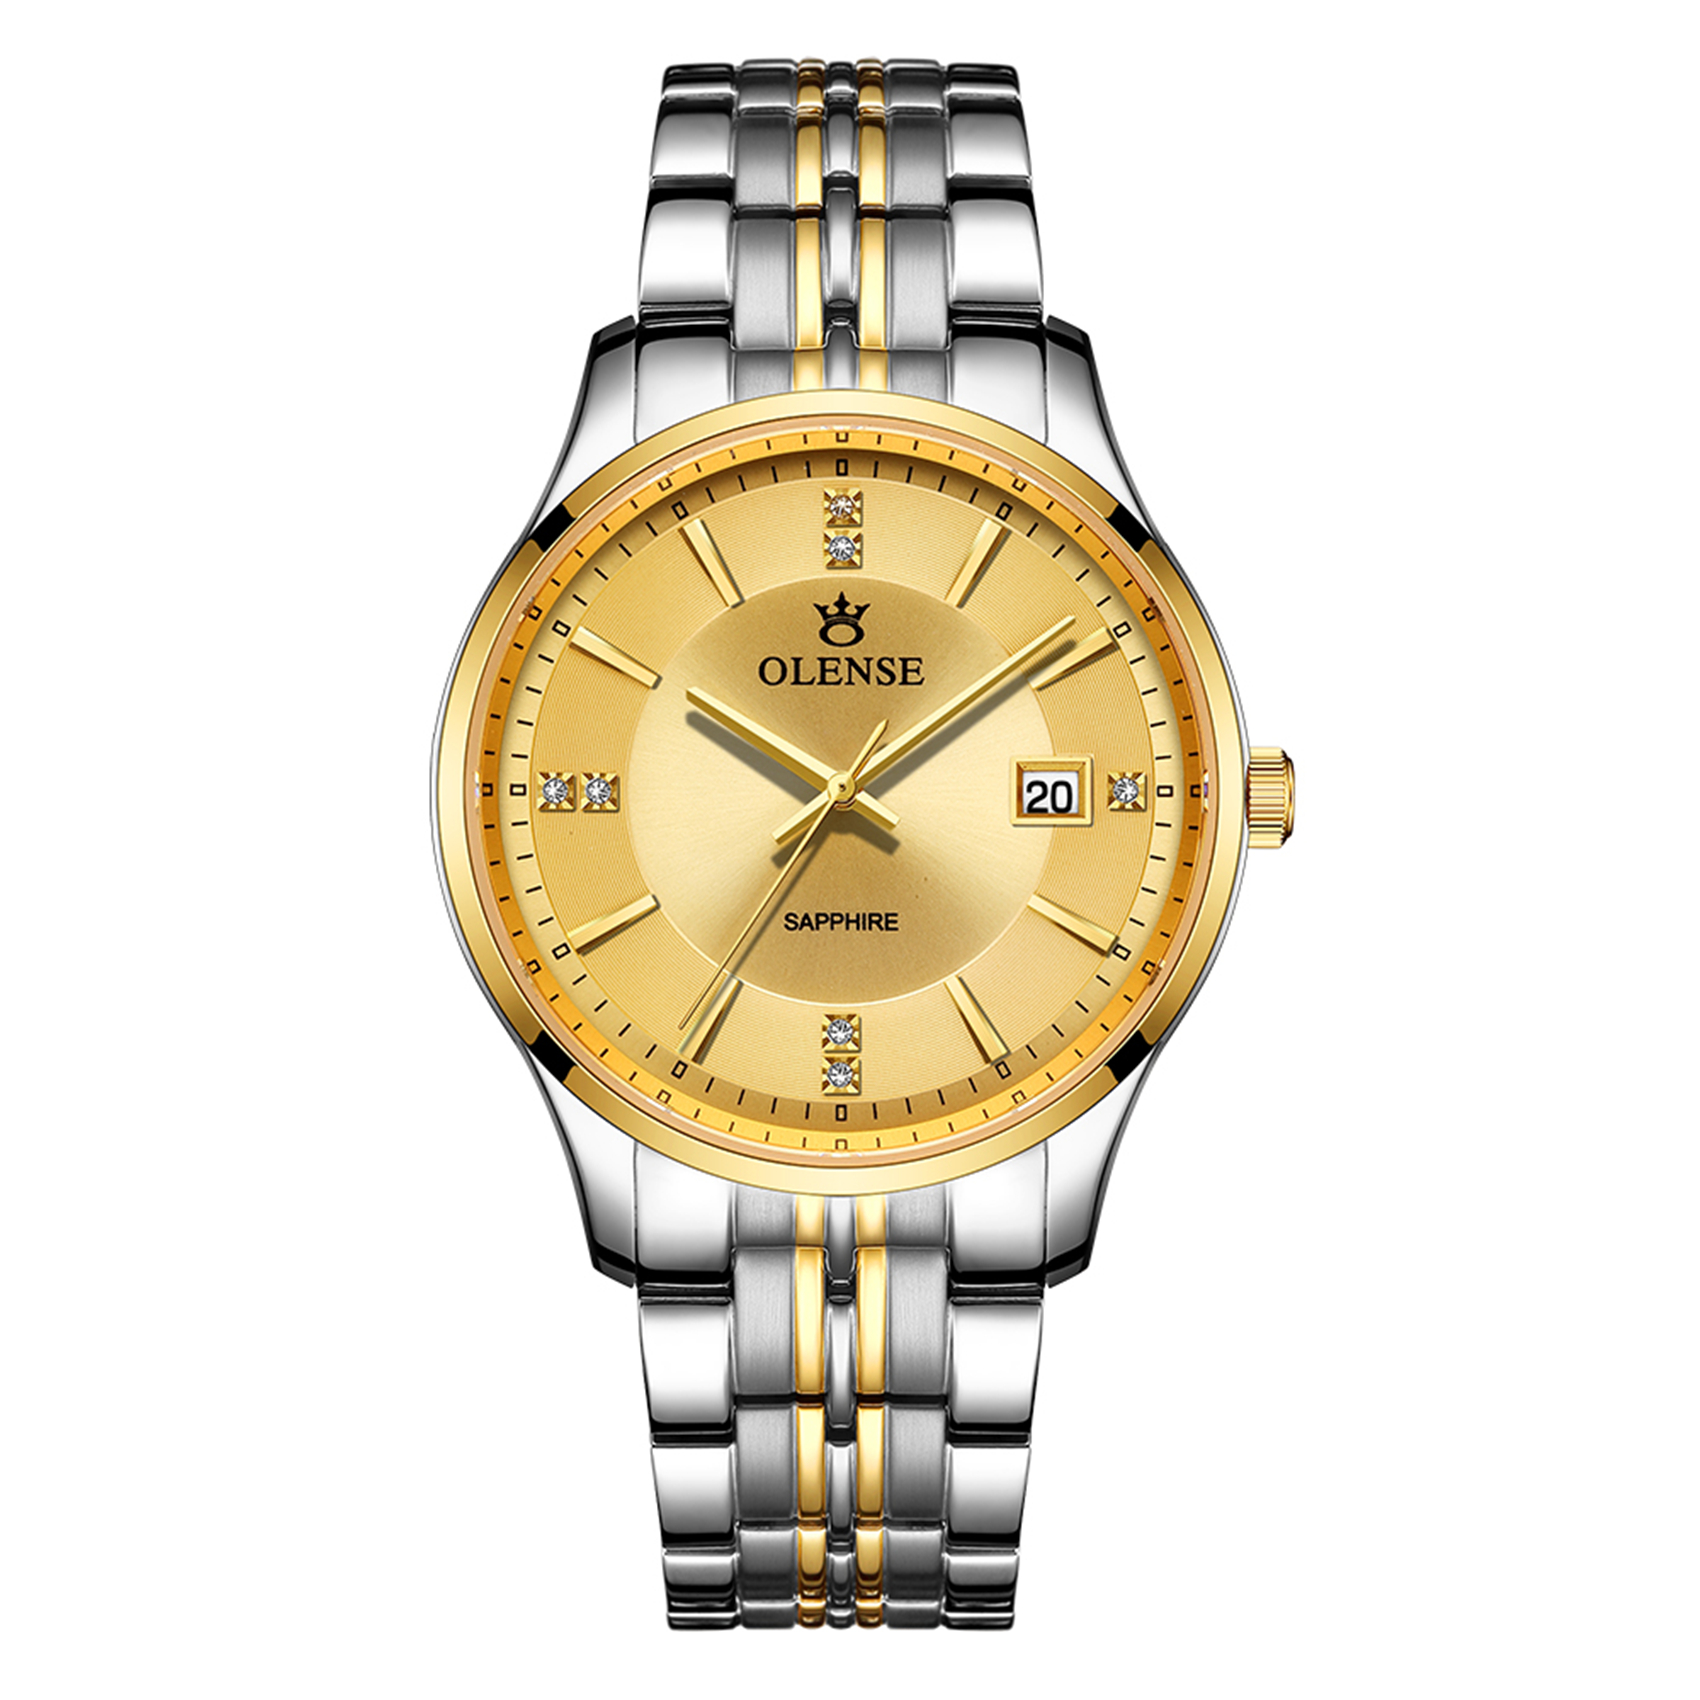 OLENSE - Luxury Dress Watch for Men, Diamond, Calendar, Quartz, Gold Dial